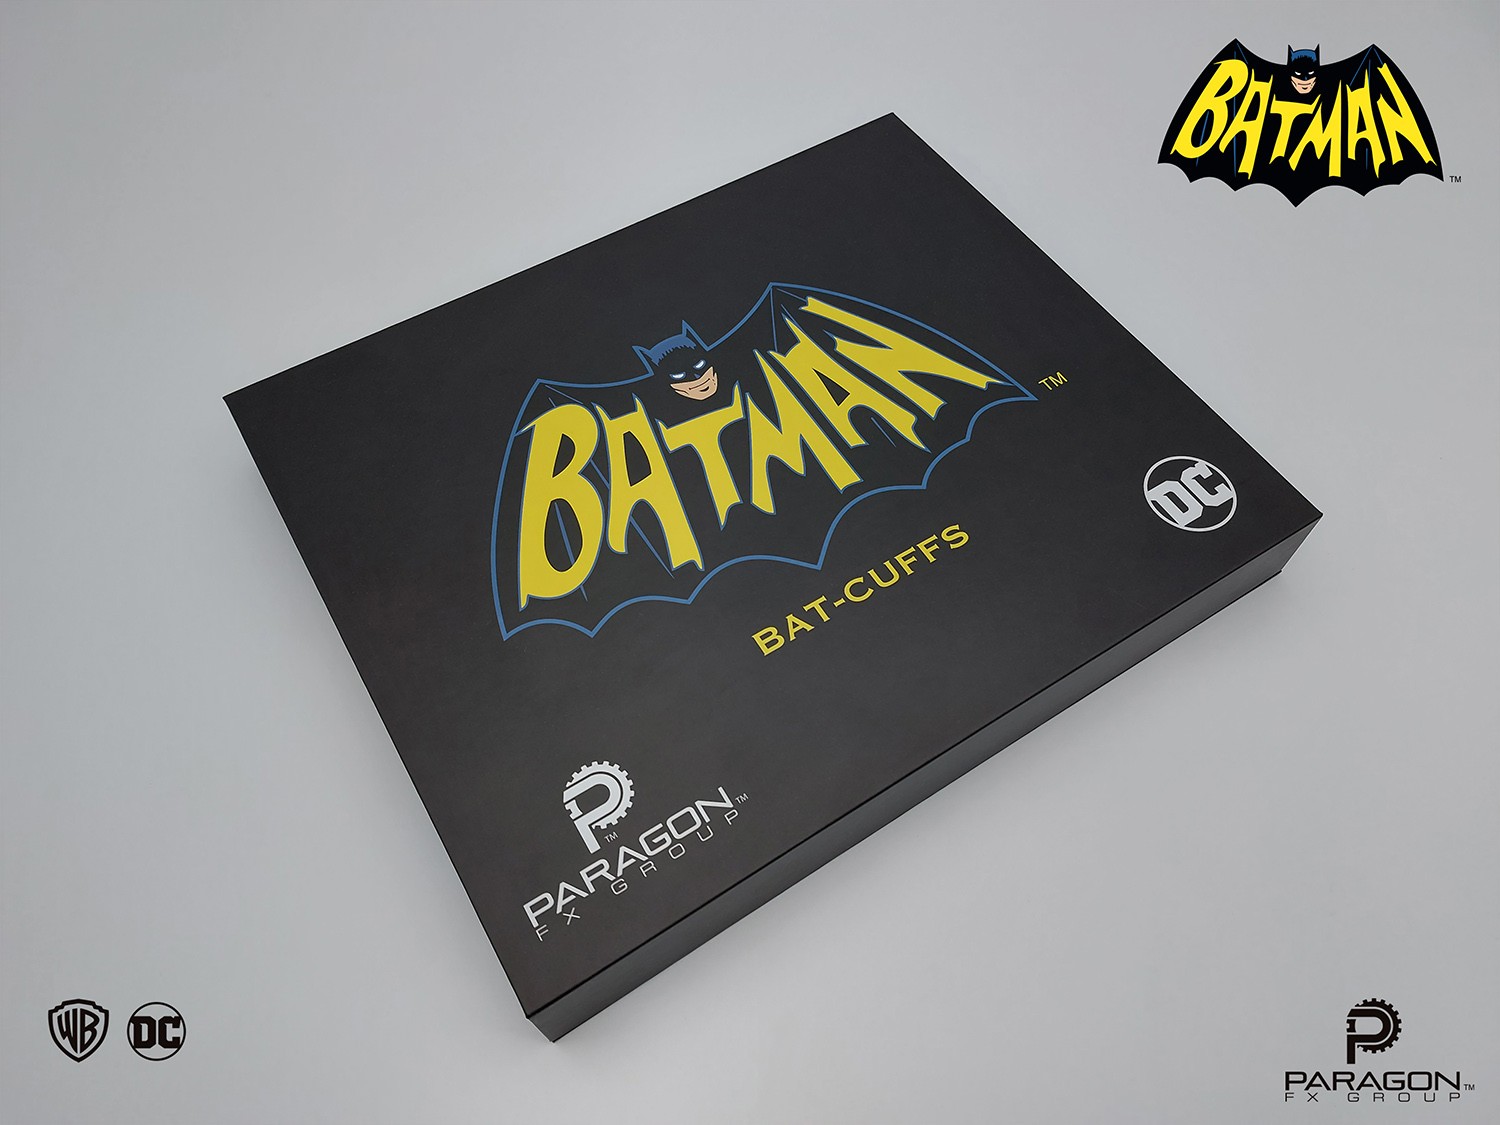 1966 Batman Bat-Cuffs- Prototype Shown